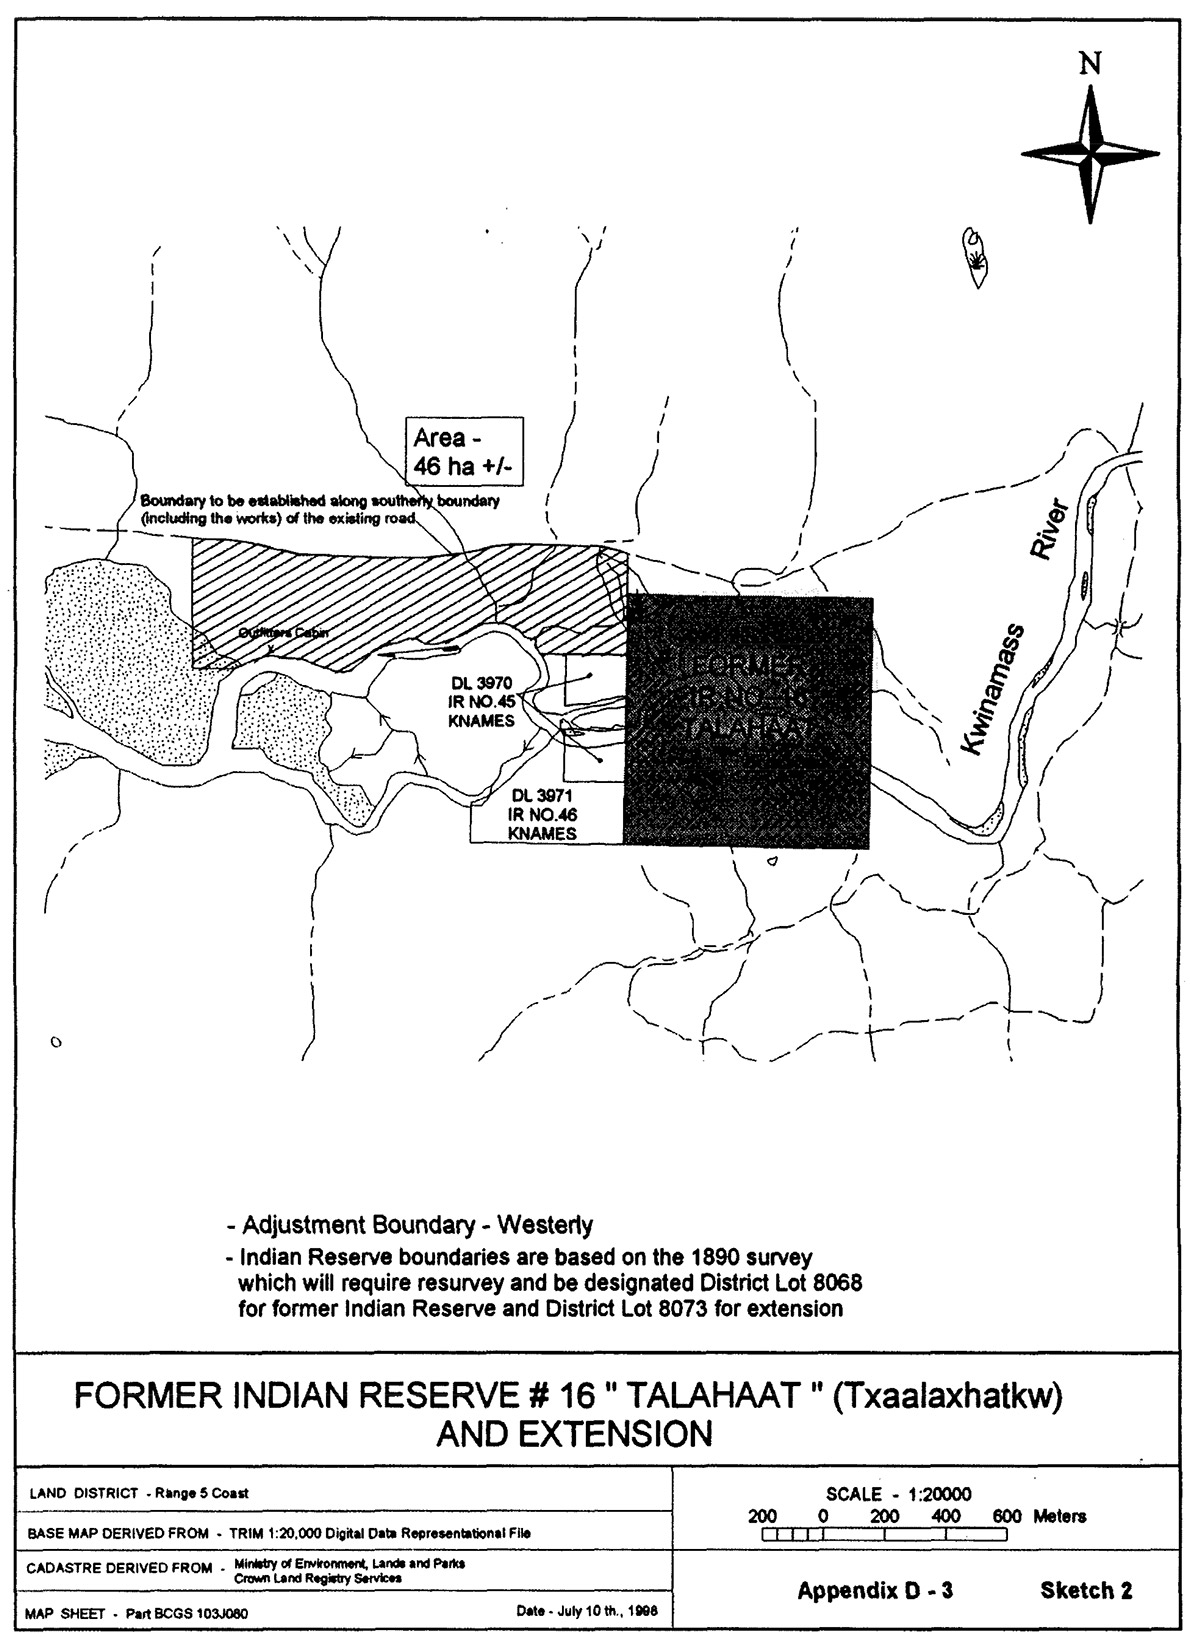 Former Indian Reserve No. 16 Talahaat (Tgaalaxghatkw) and extension